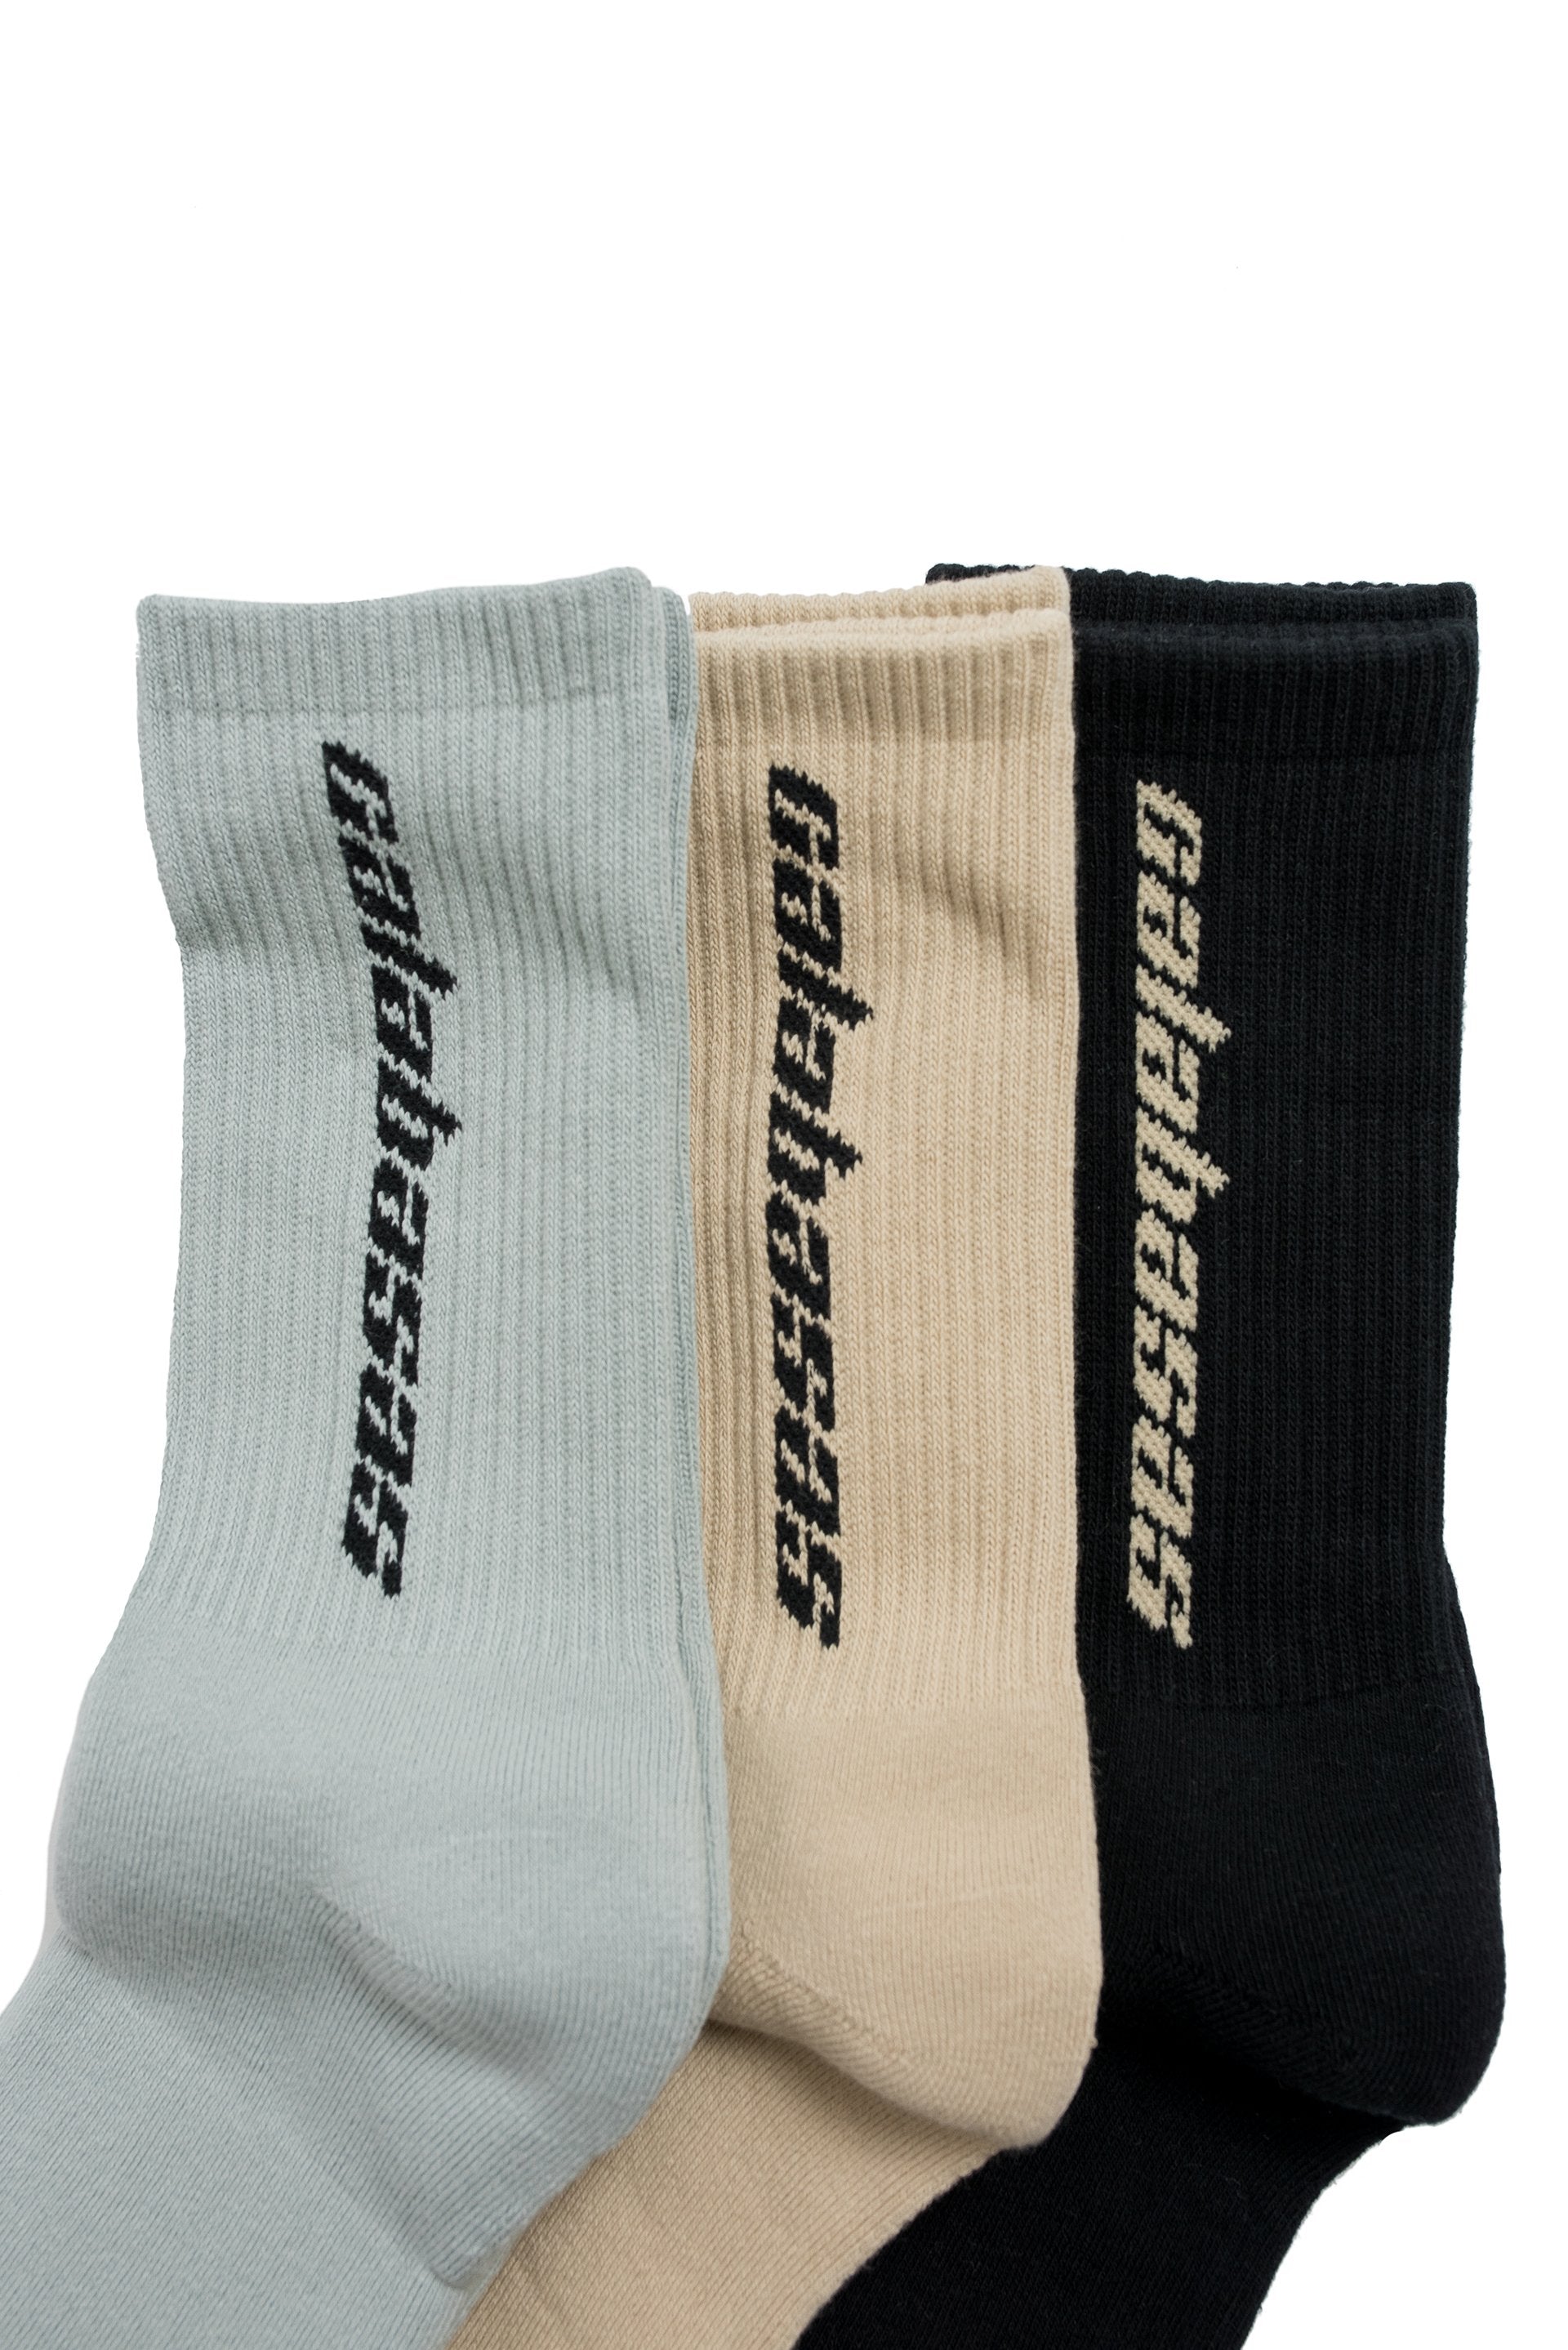 Yeezy Calabasas Socks for | UJNG